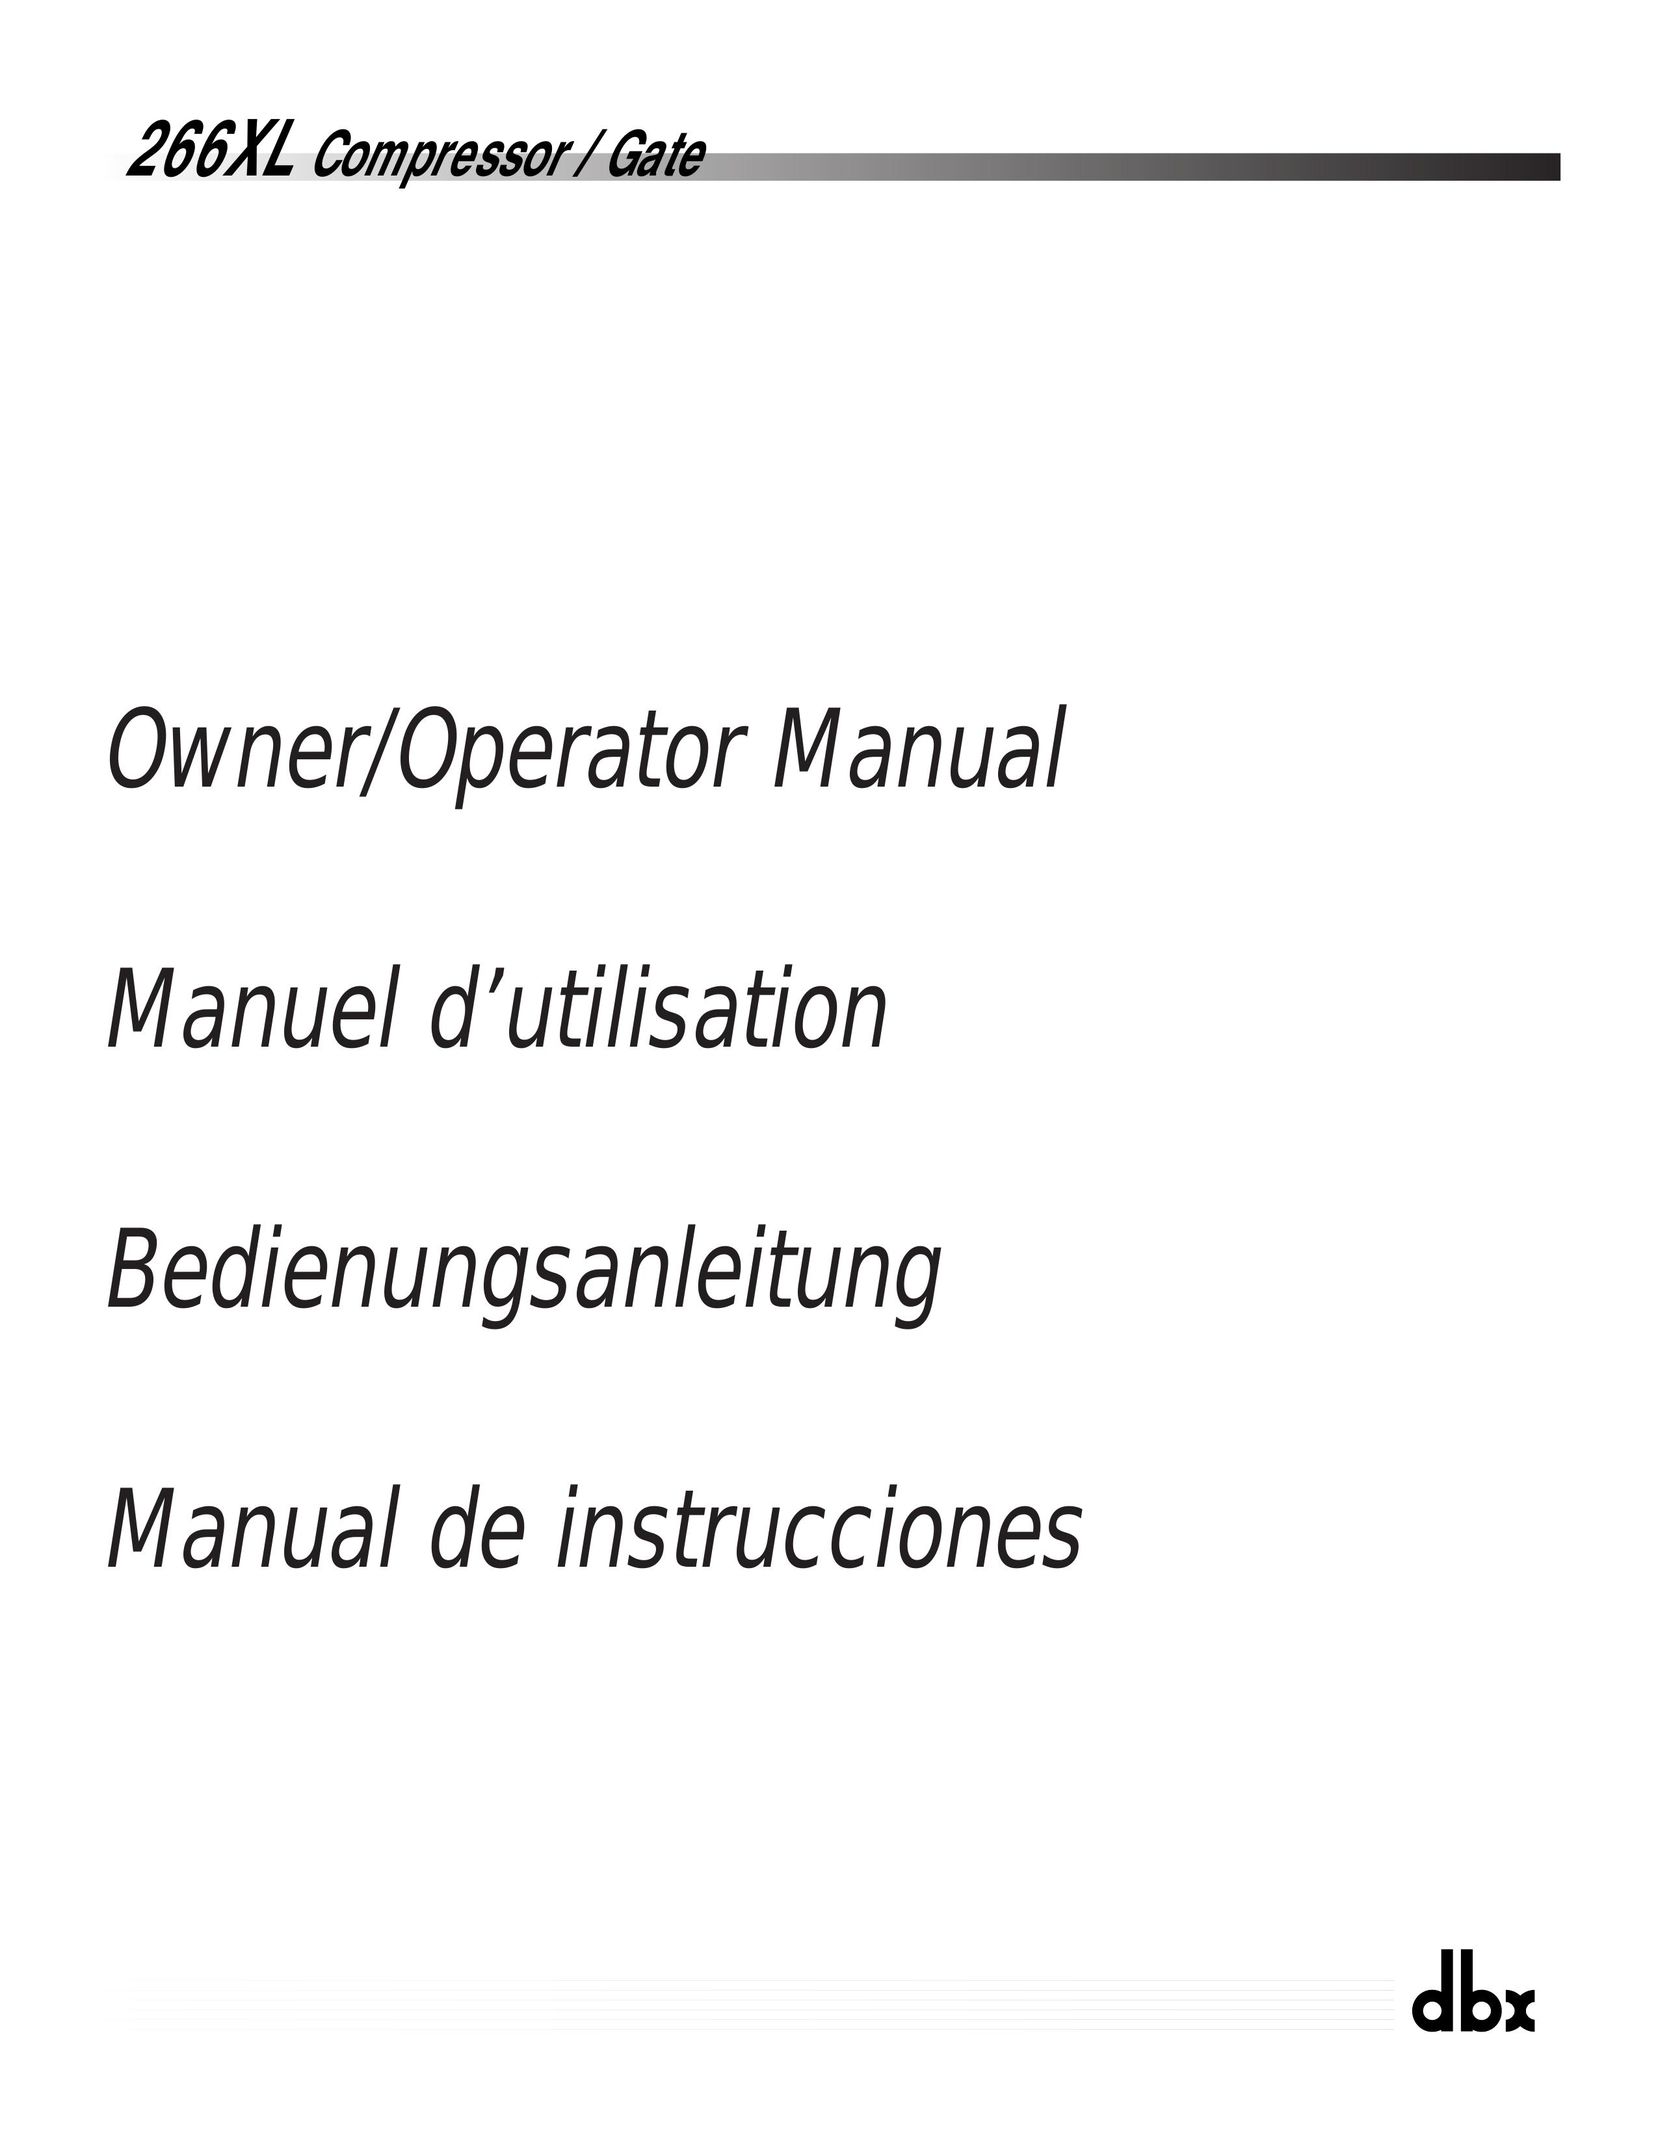 dbx Pro 266XL Air Compressor User Manual